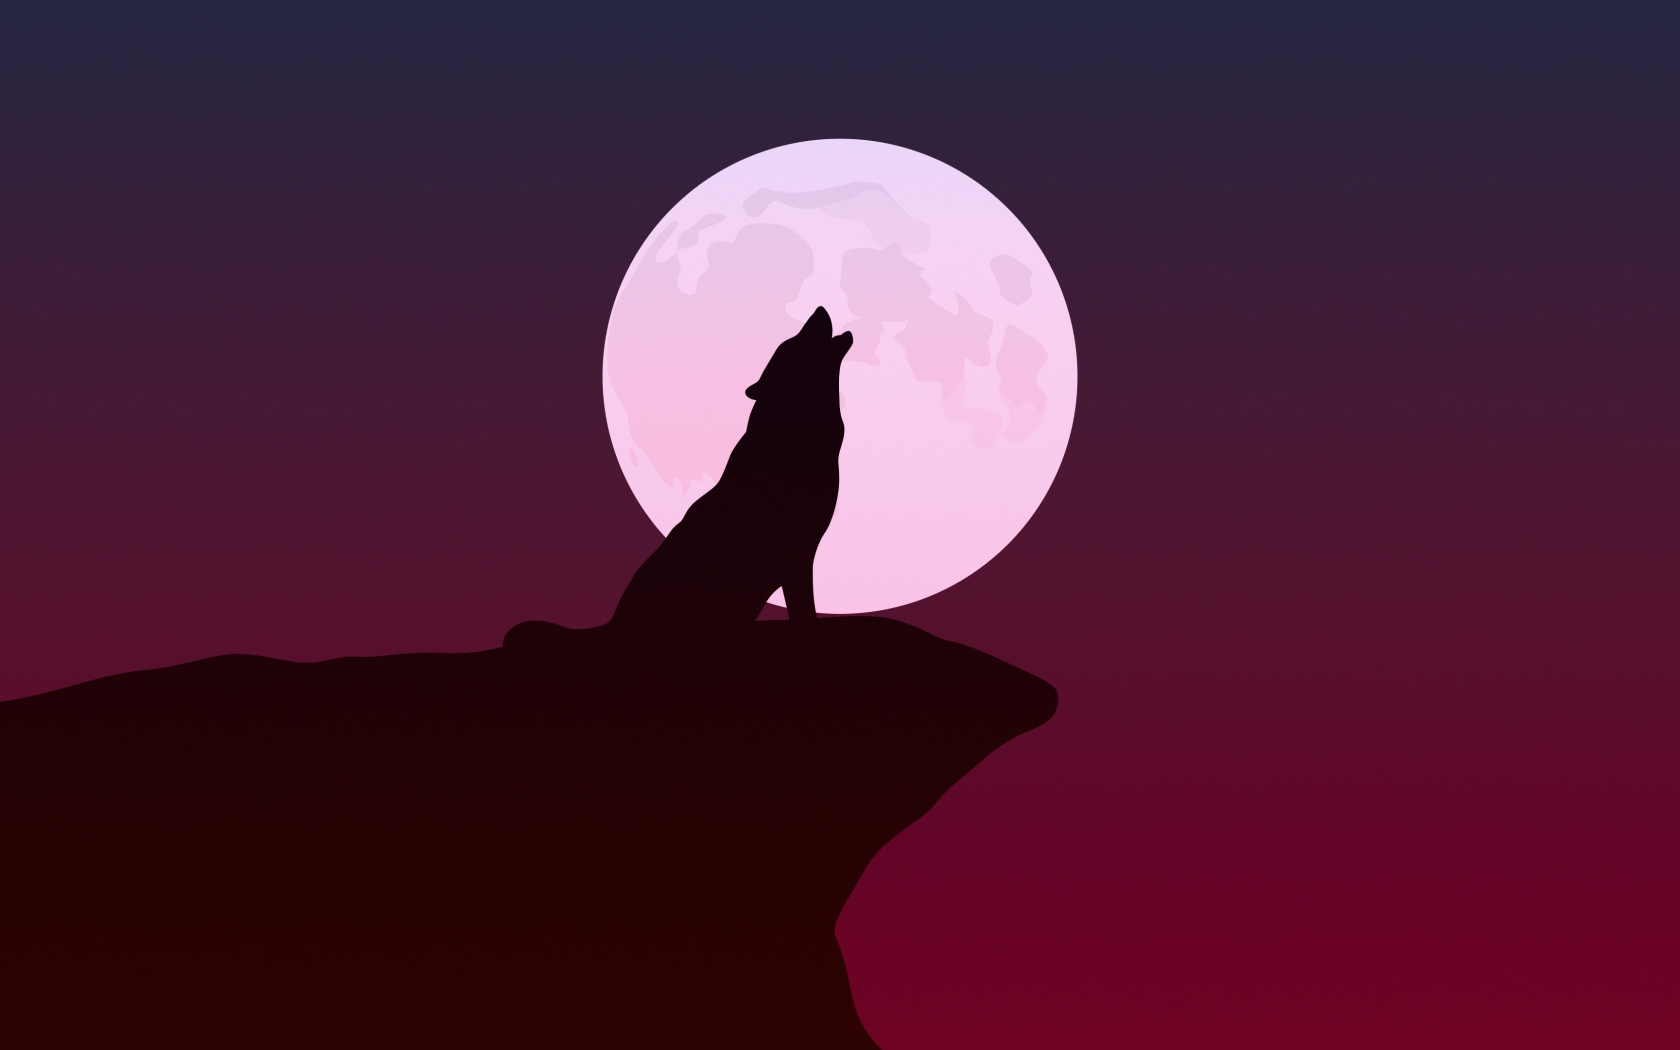 Download wallpaper 1680x1050 howling, wolf, silhouette, minimalist art, 16: 10 widescreen 1680x1050 hd background, 20188